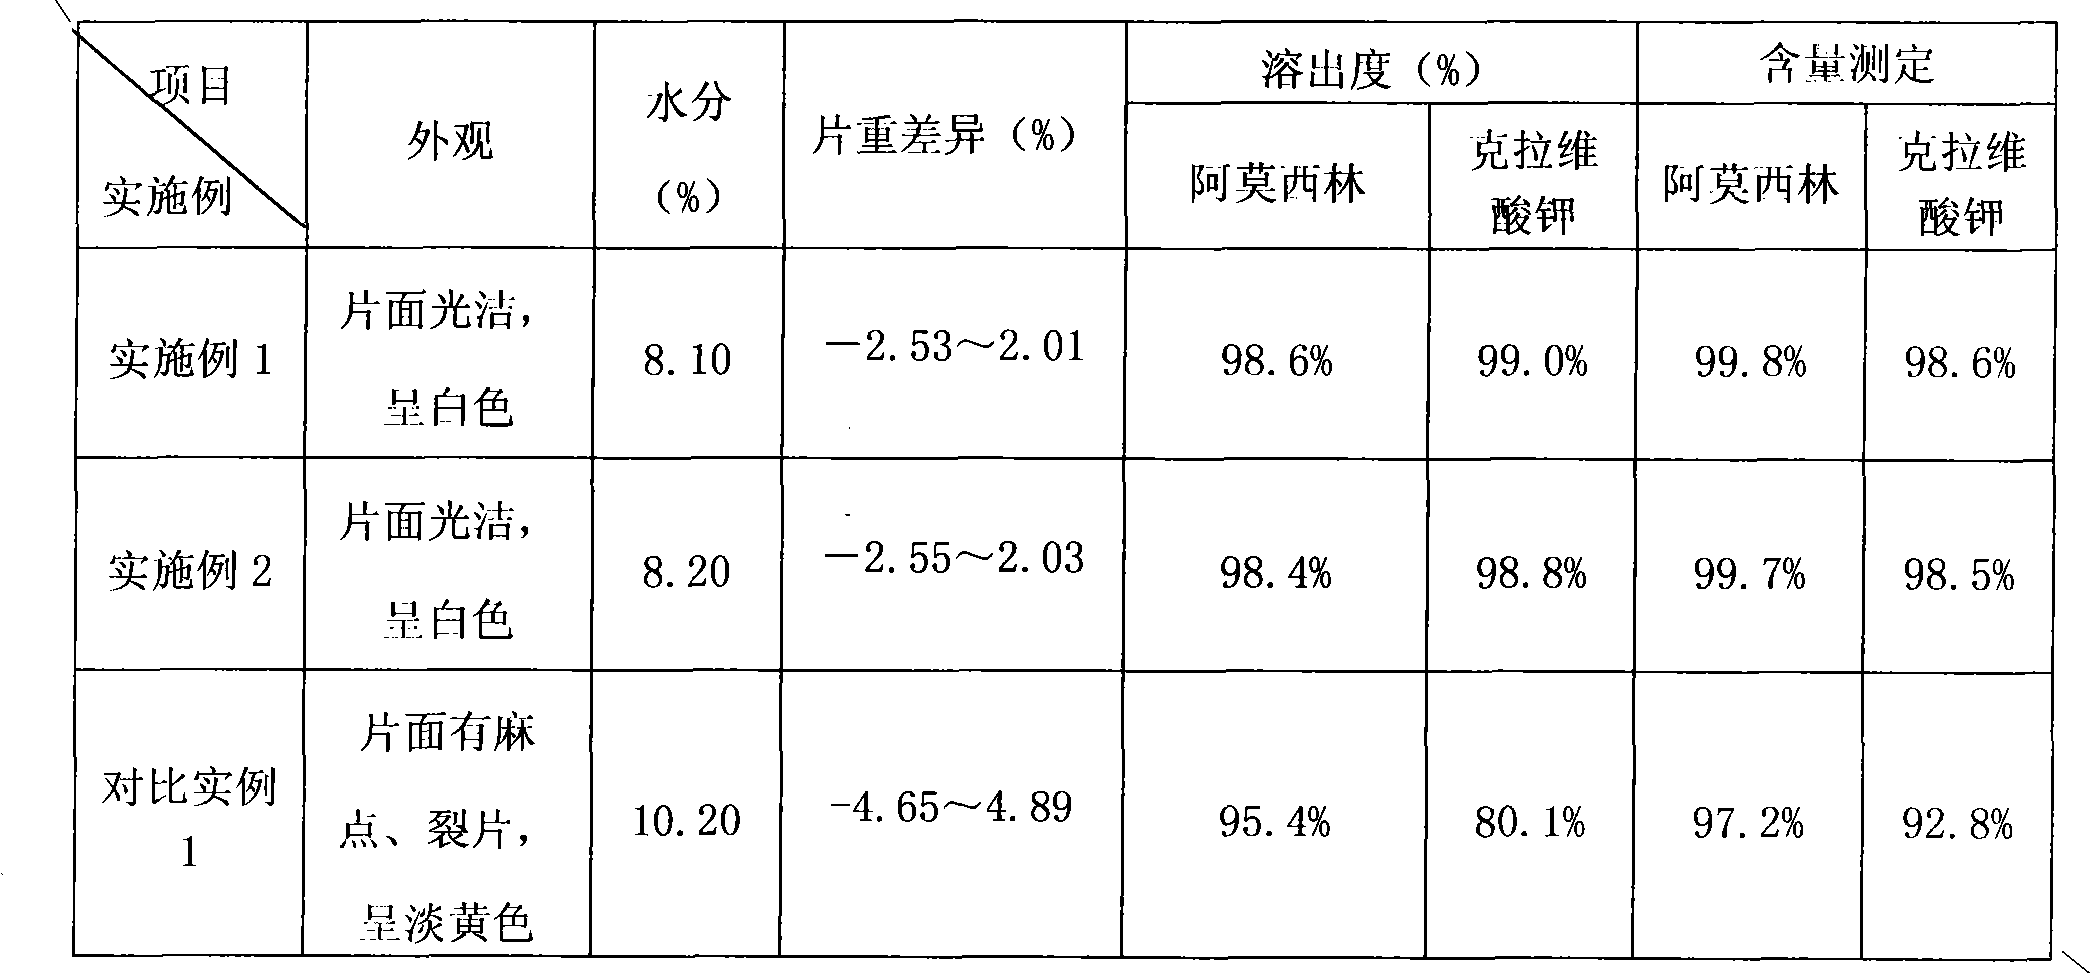 Preparation method of amoxicillin and clavulanate potassium tablets